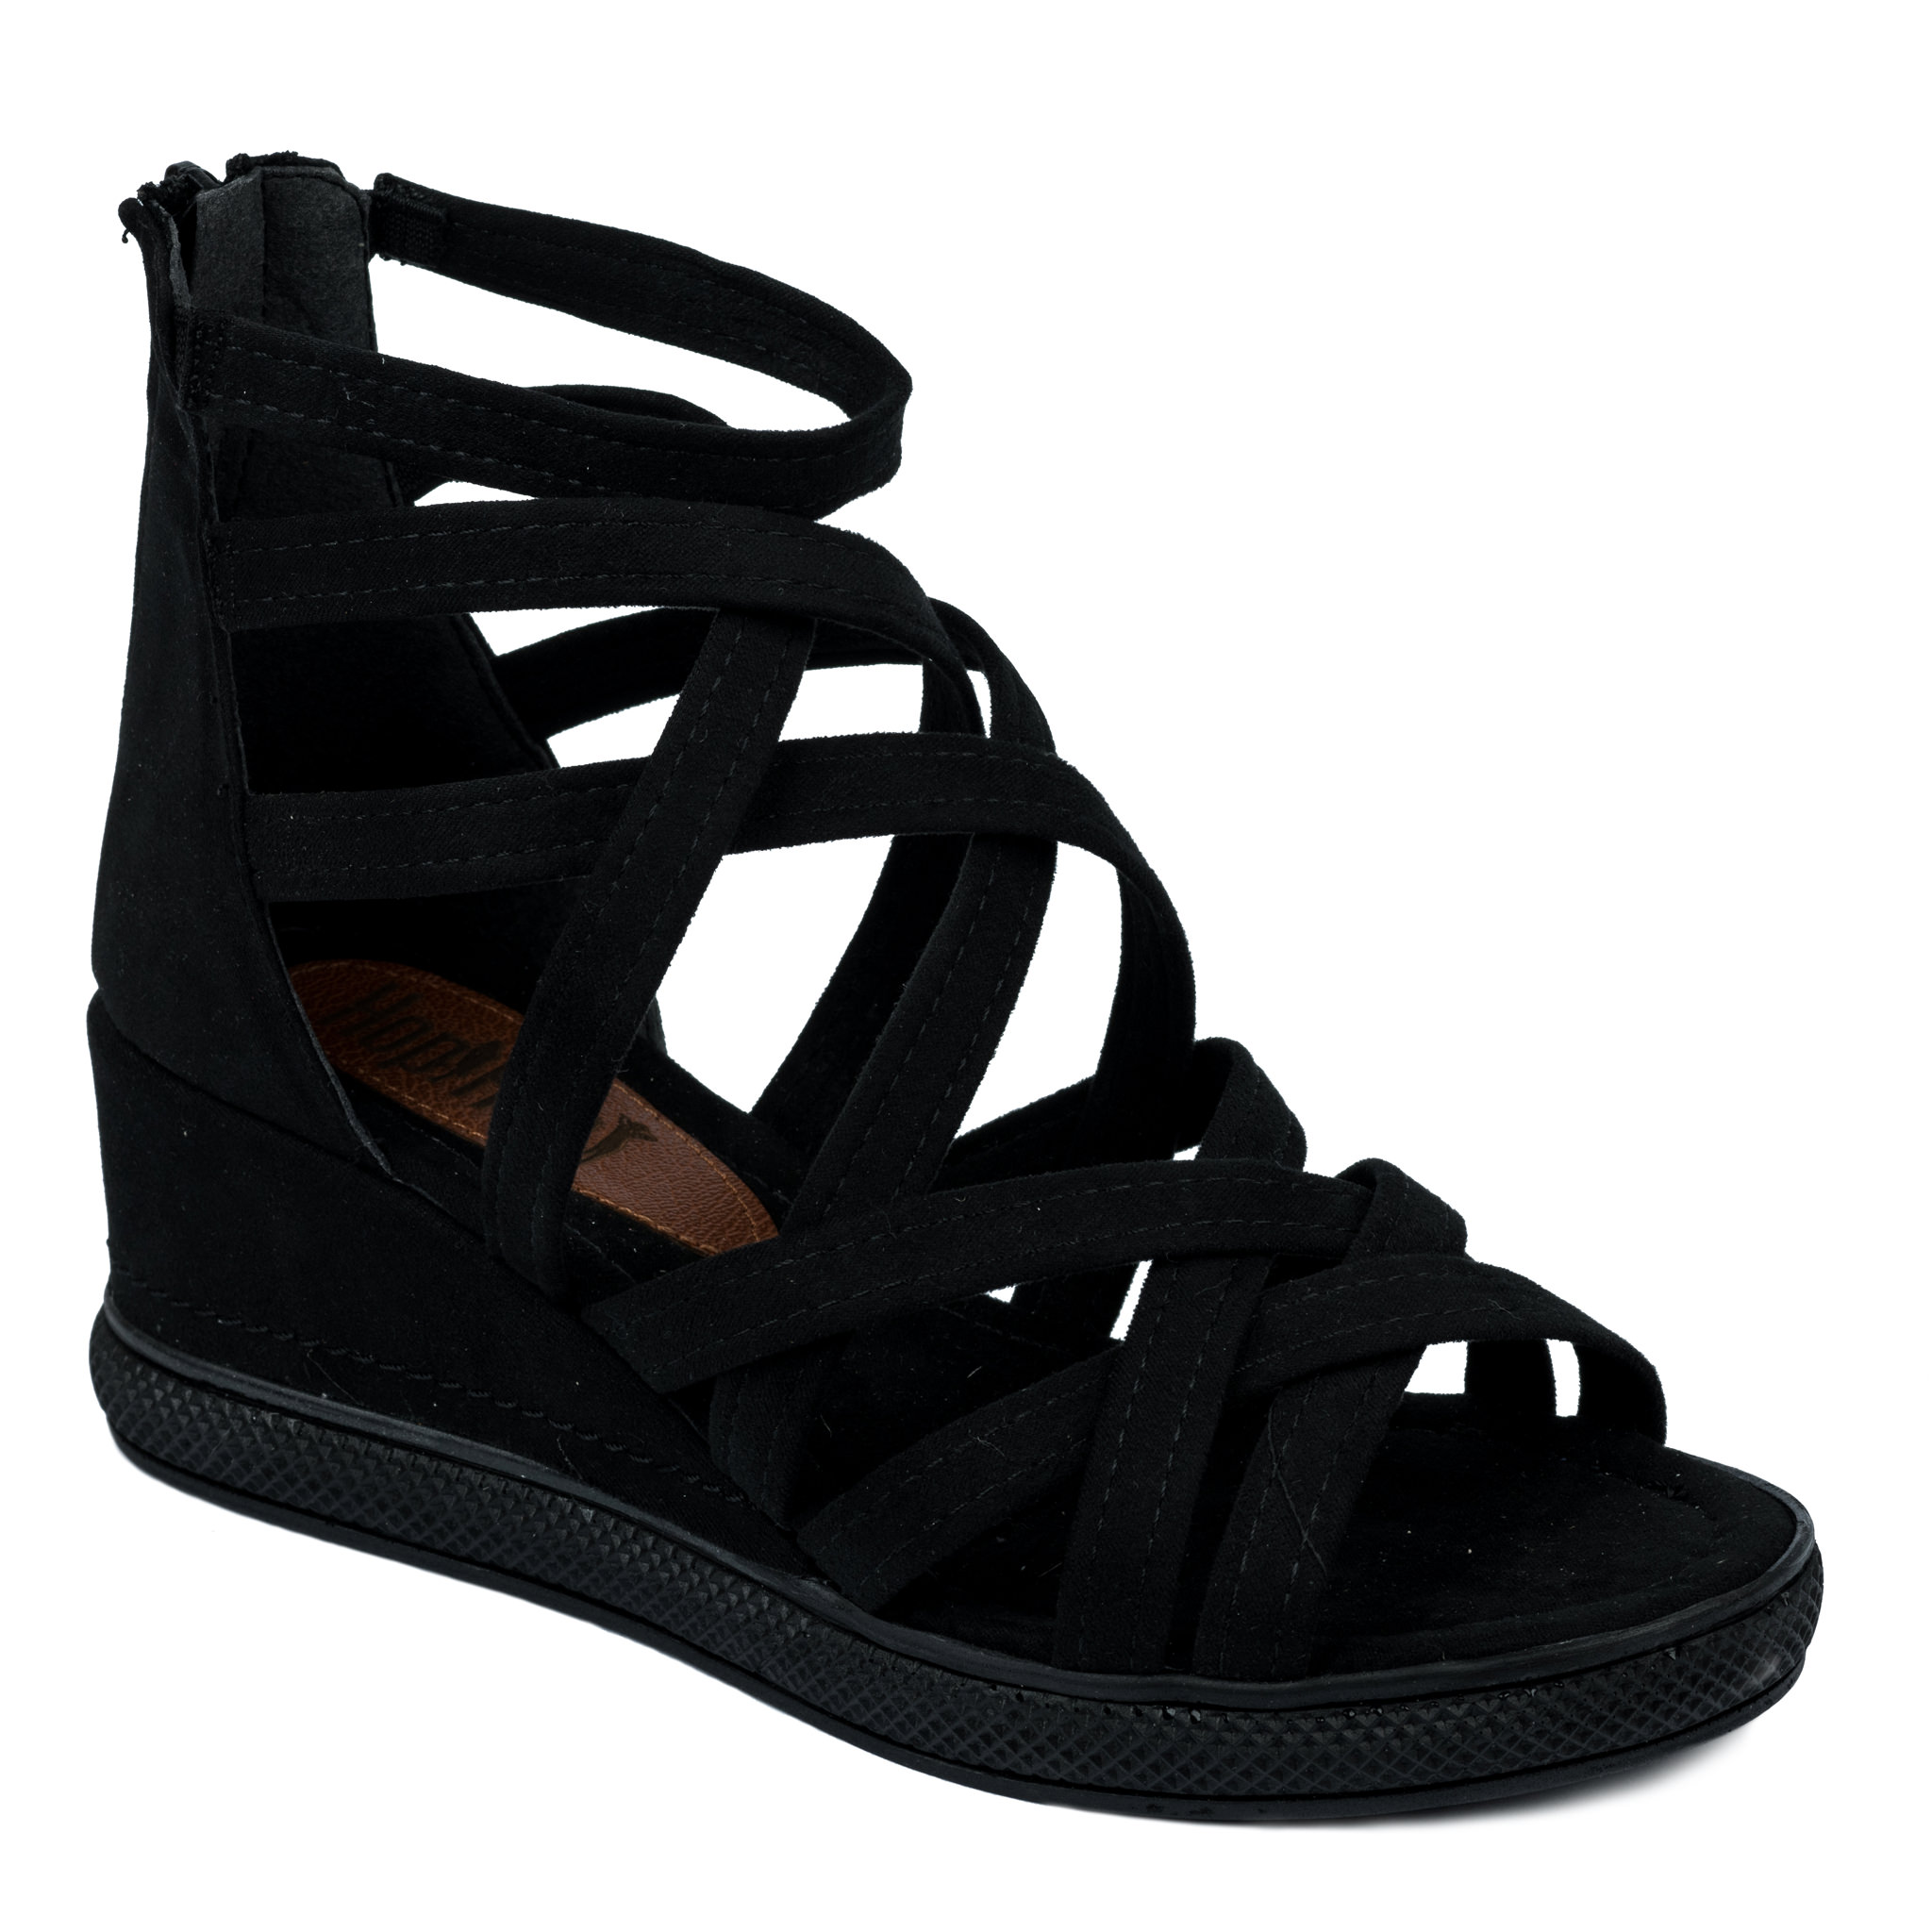 Women sandals A601 - BLACK